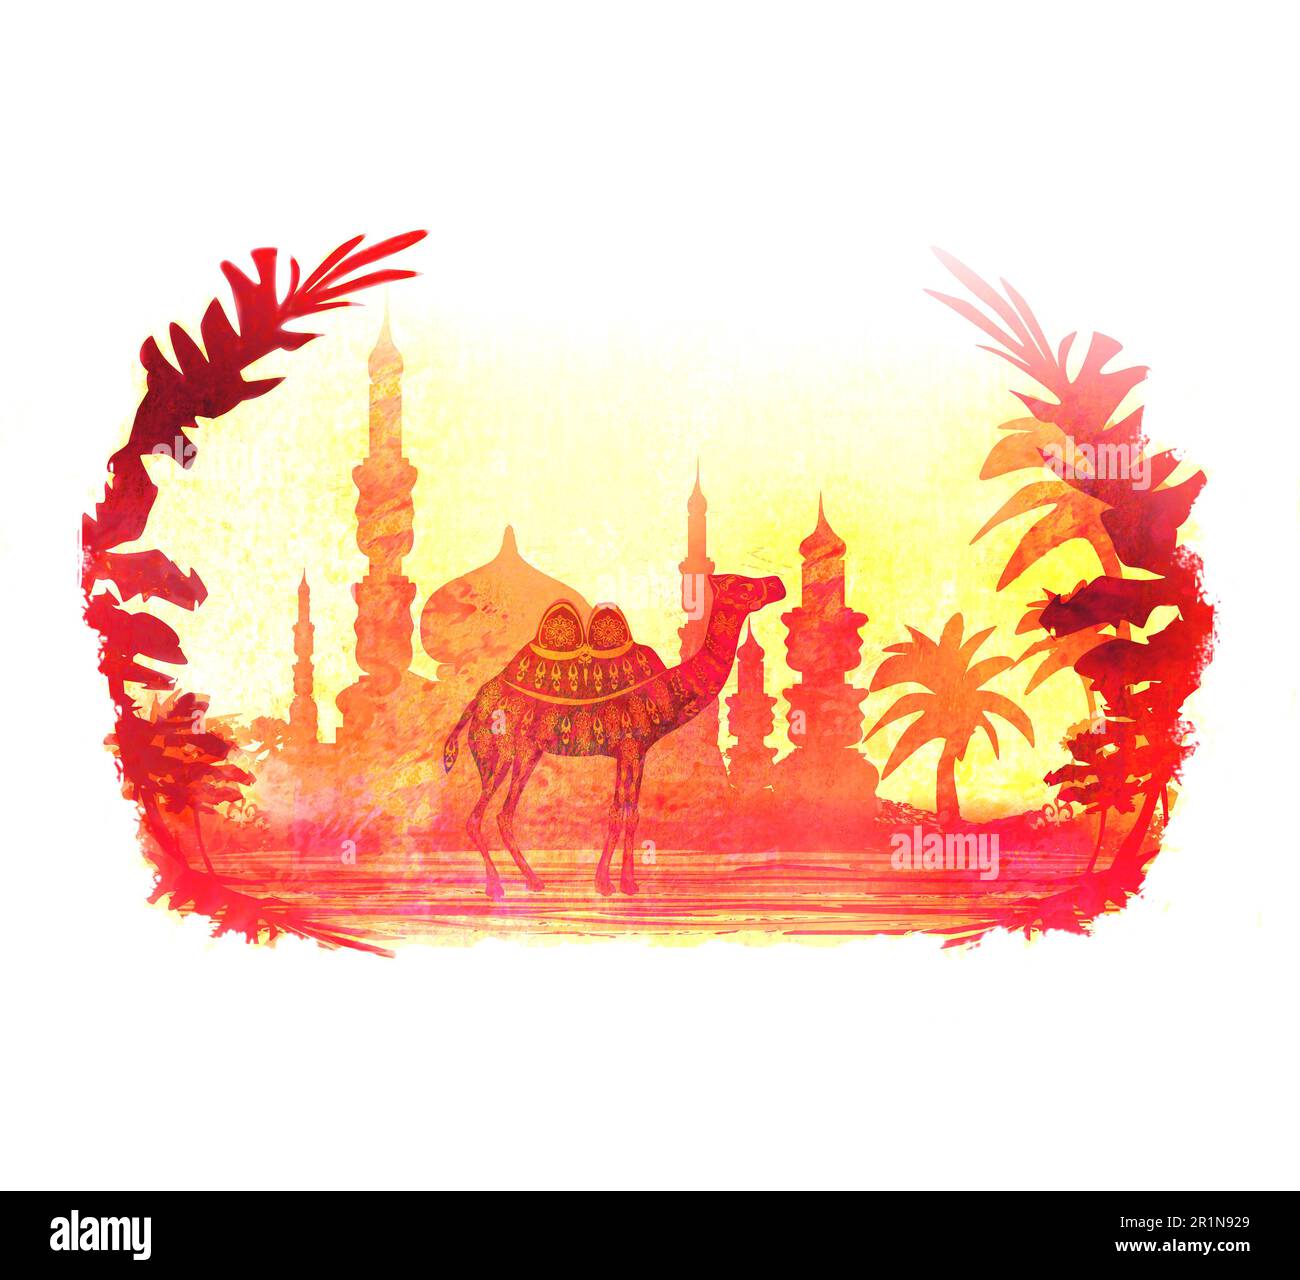 Kamelritt bei Sonnenaufgang - Grunge Kunstkarte Stockfoto